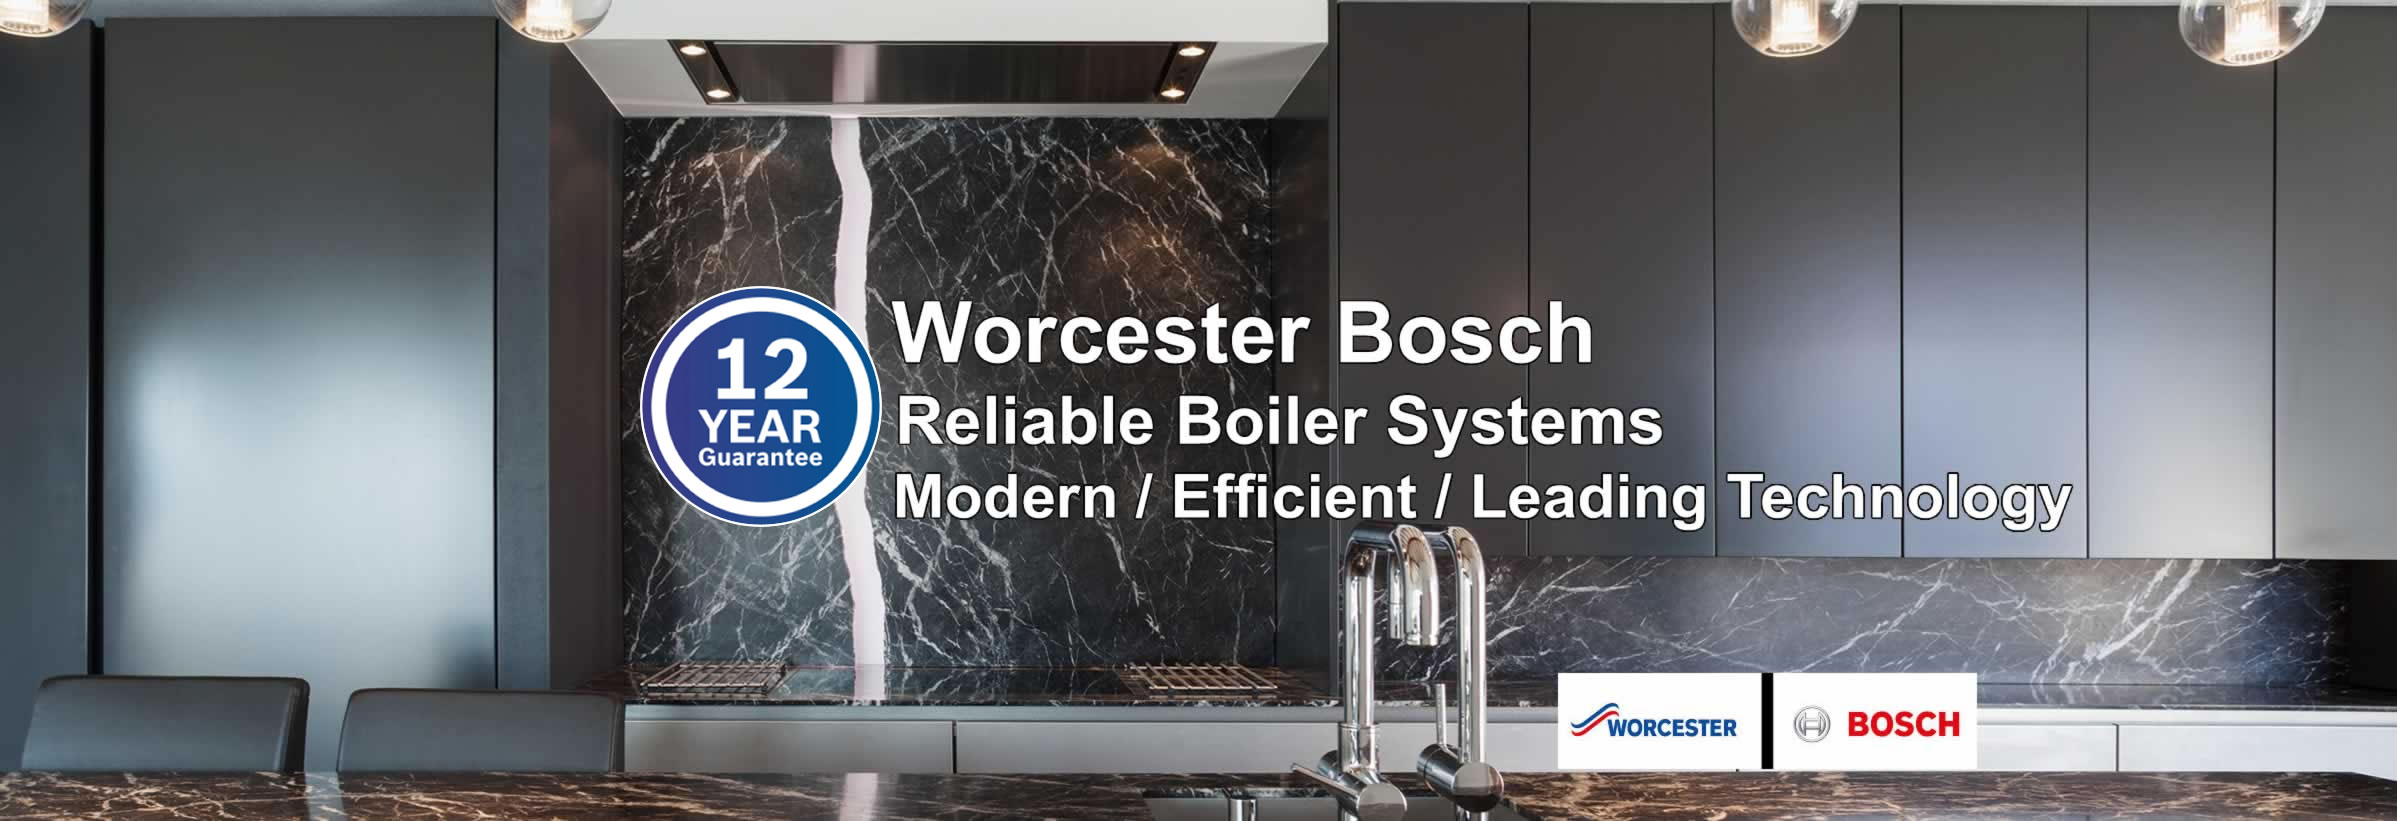 boiler installations in somerset and bath bristol plumber that repairs boilers